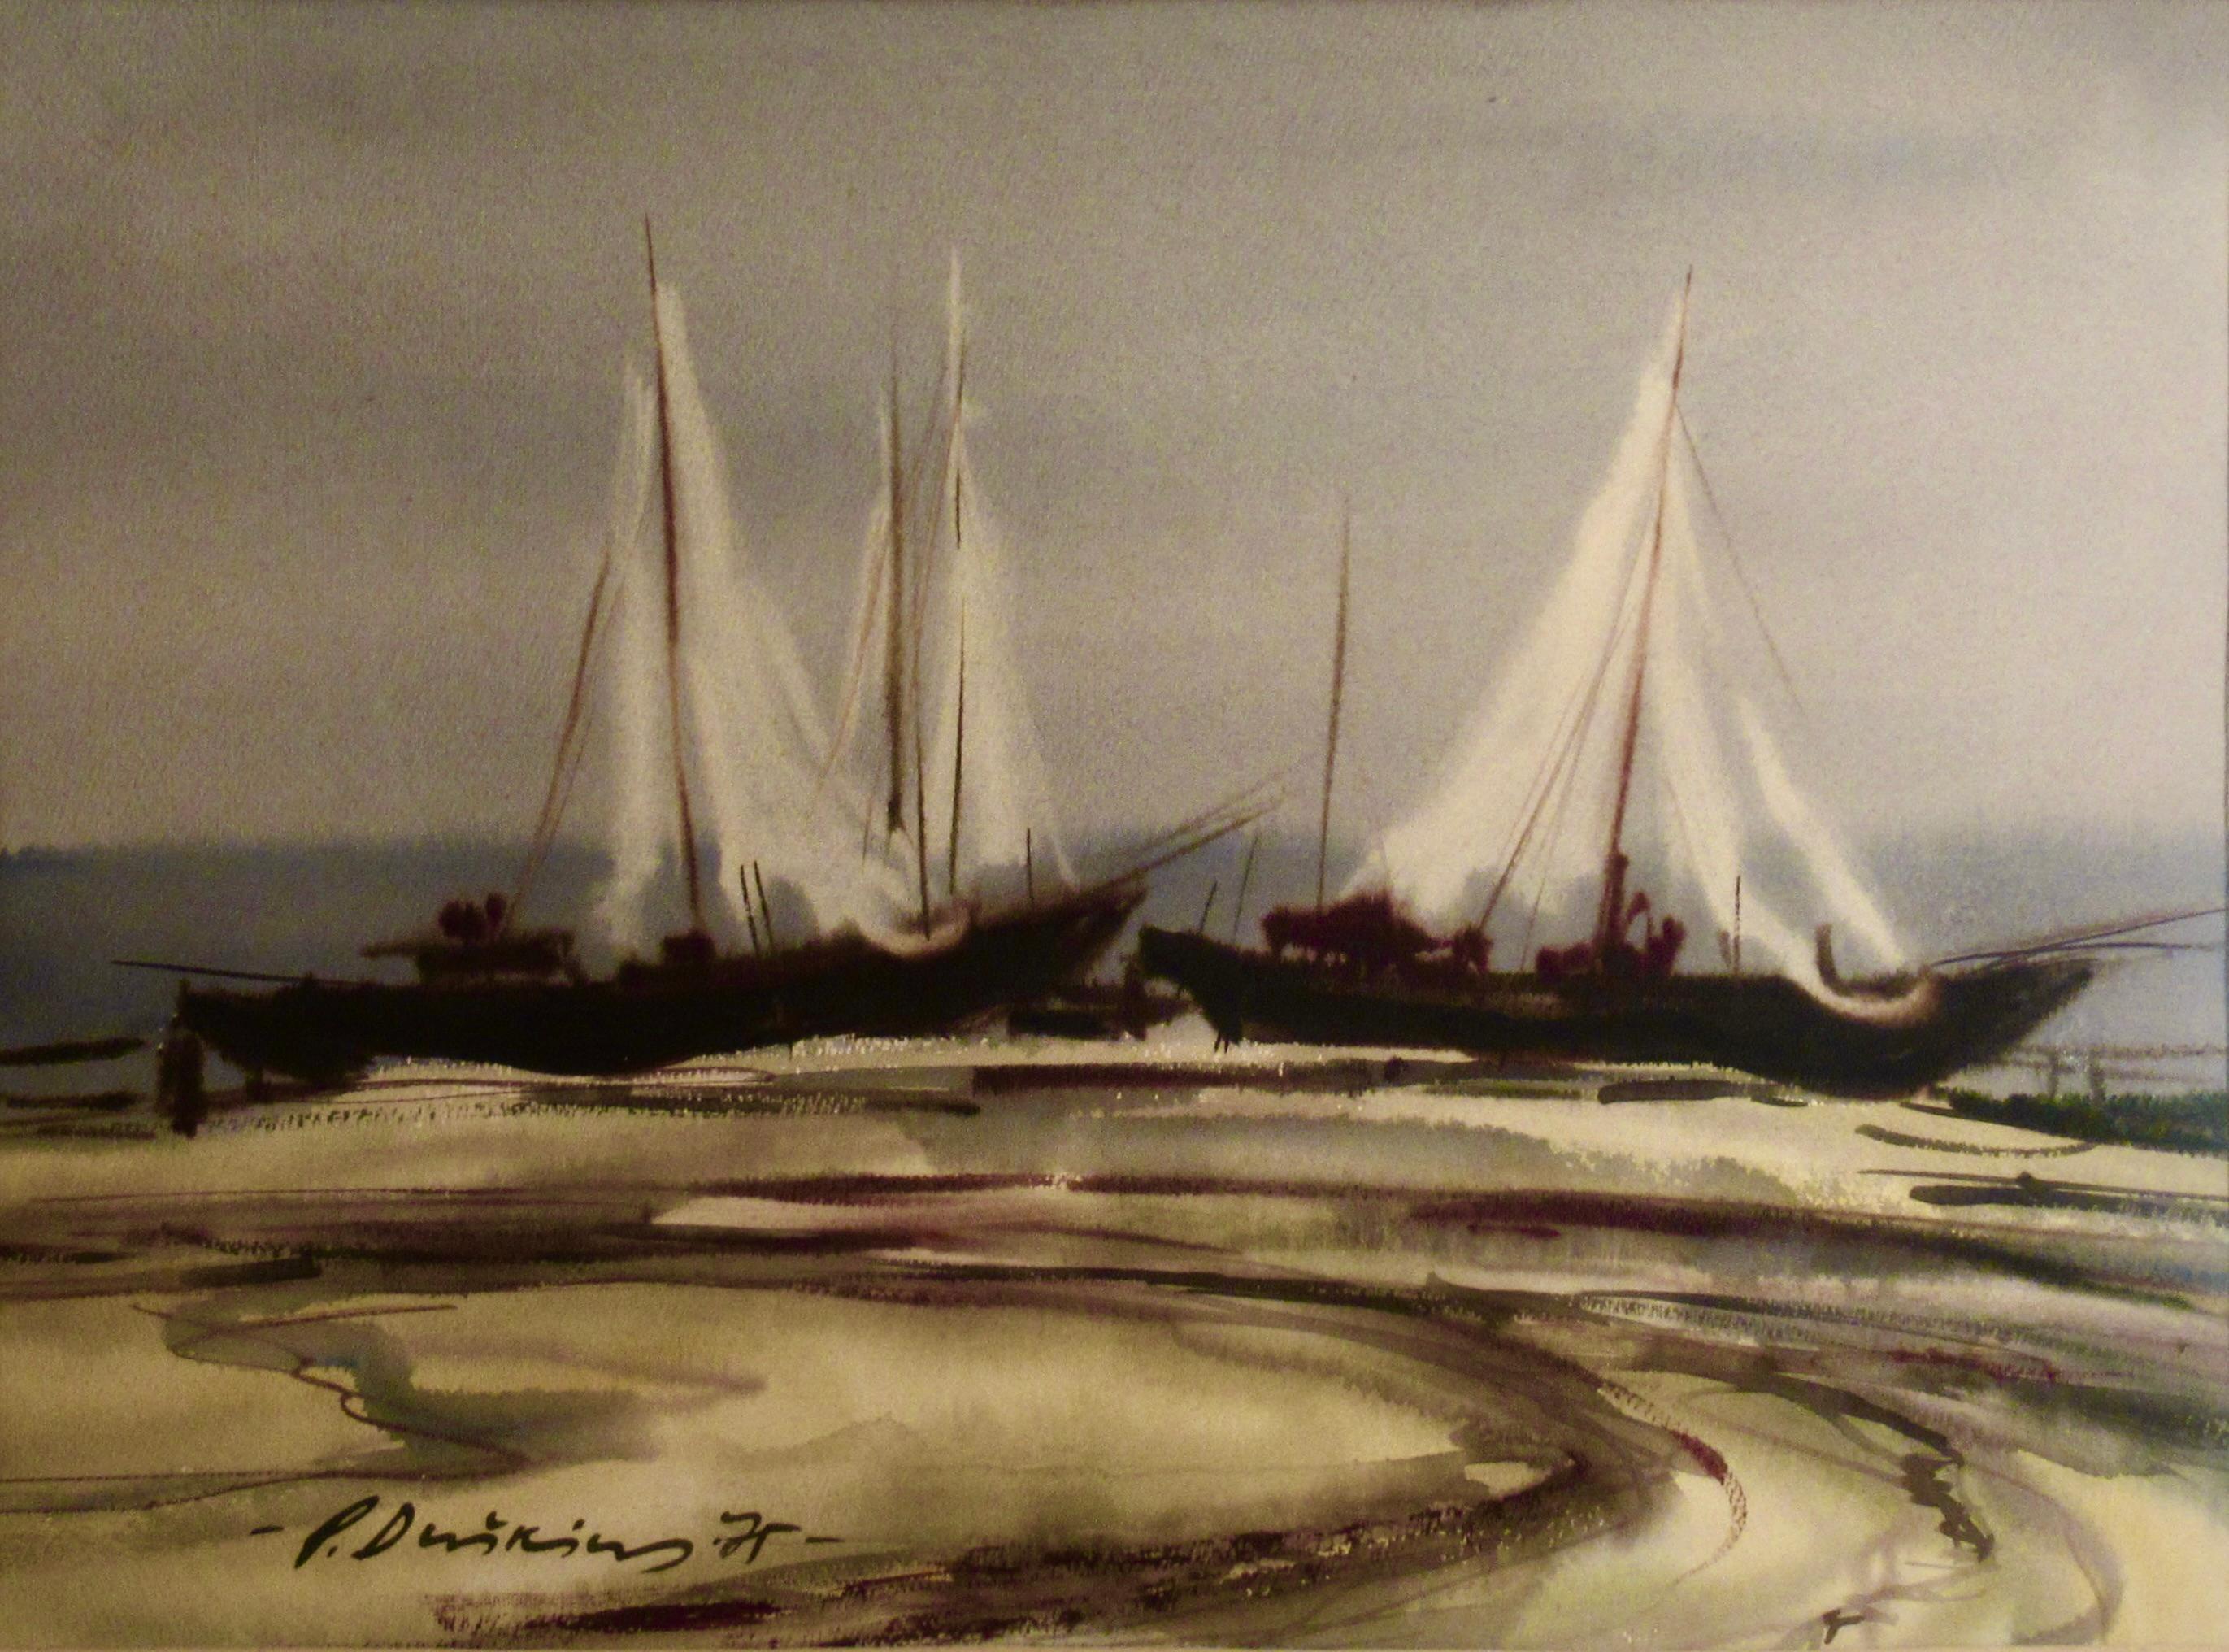 Seashore with Boats - Art by Paul Duskins